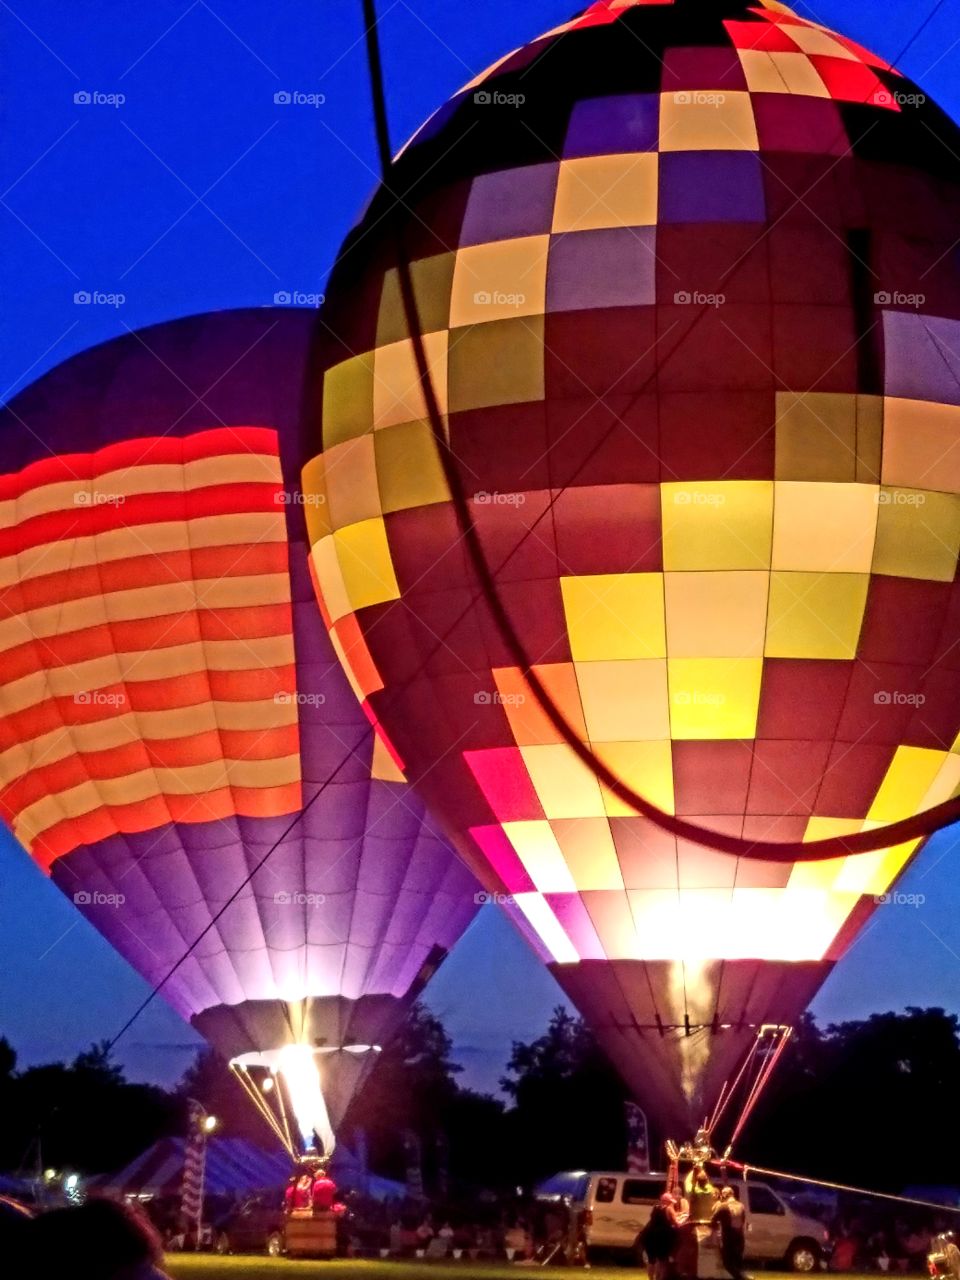 Hot air balloons illuminated during a summer festival.